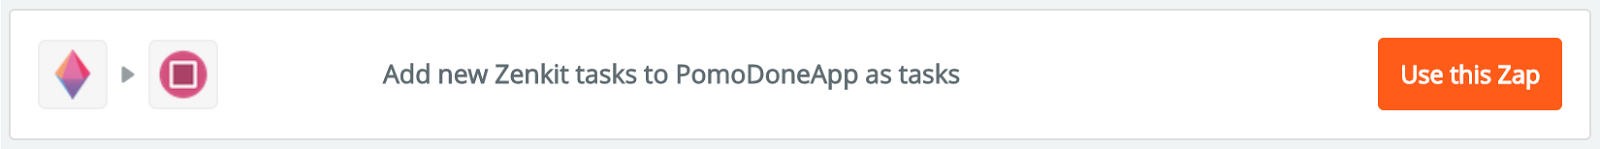 add new task to pomodone app